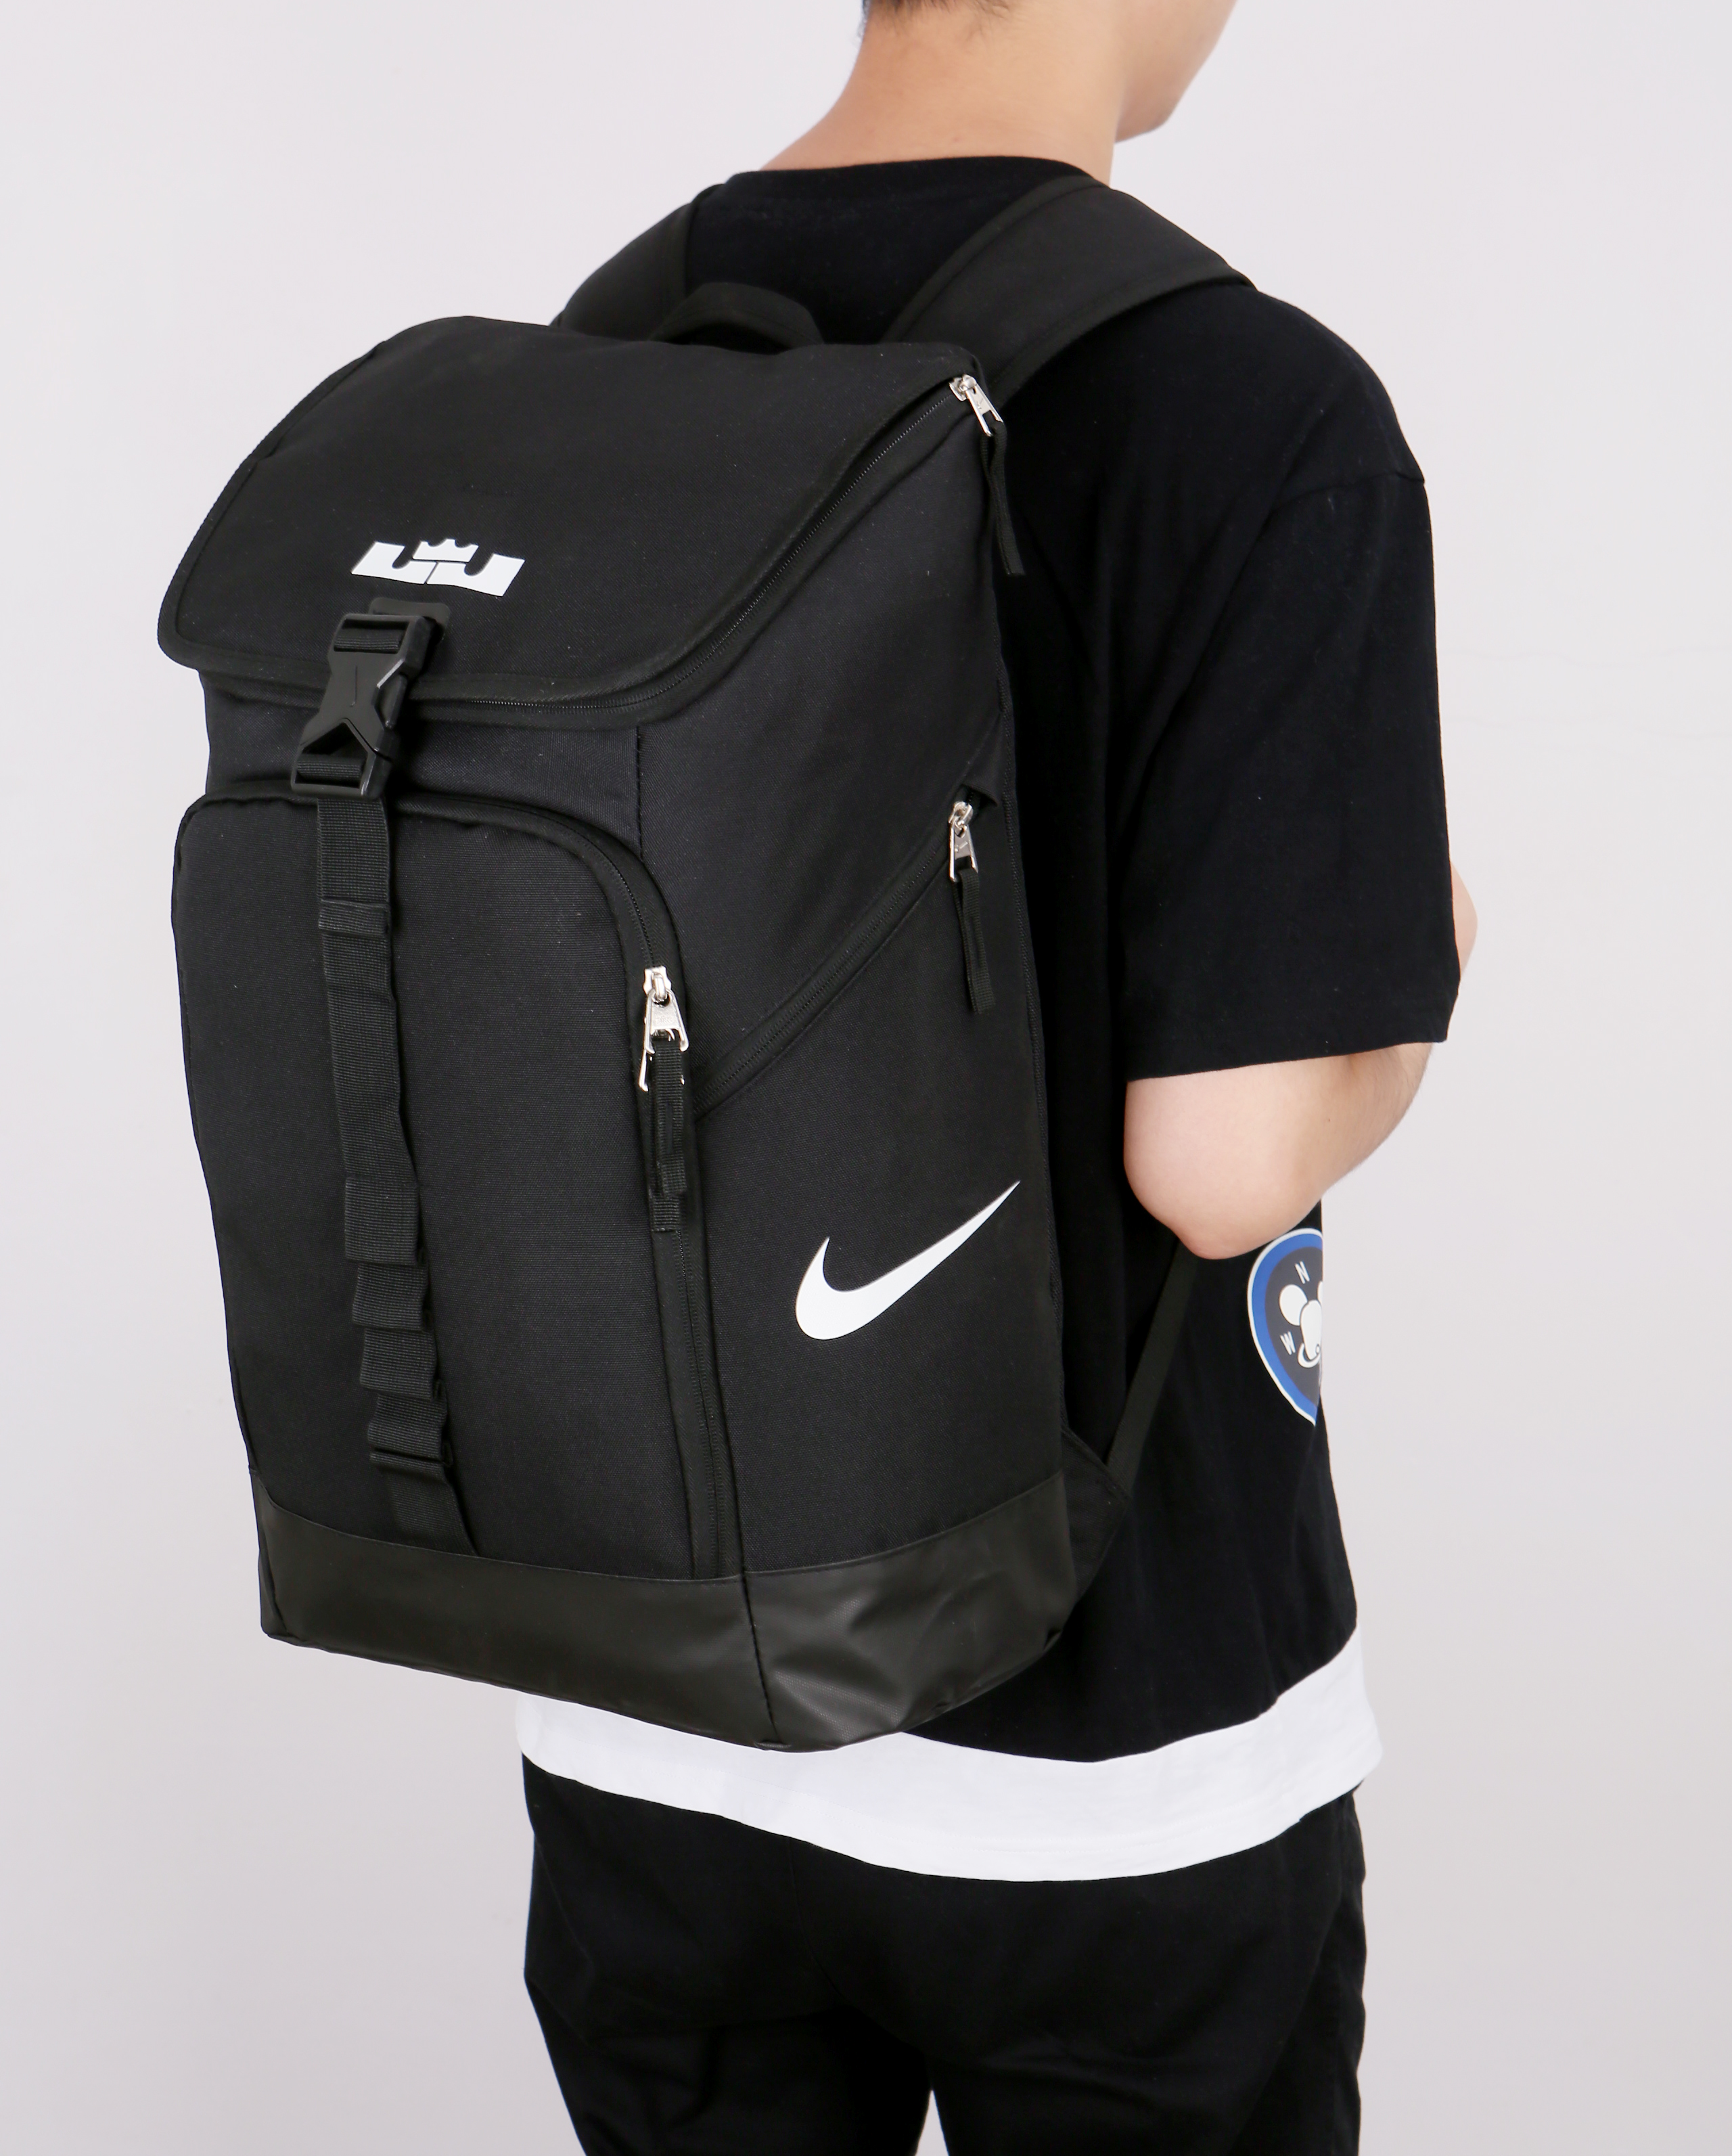 black lebron backpack